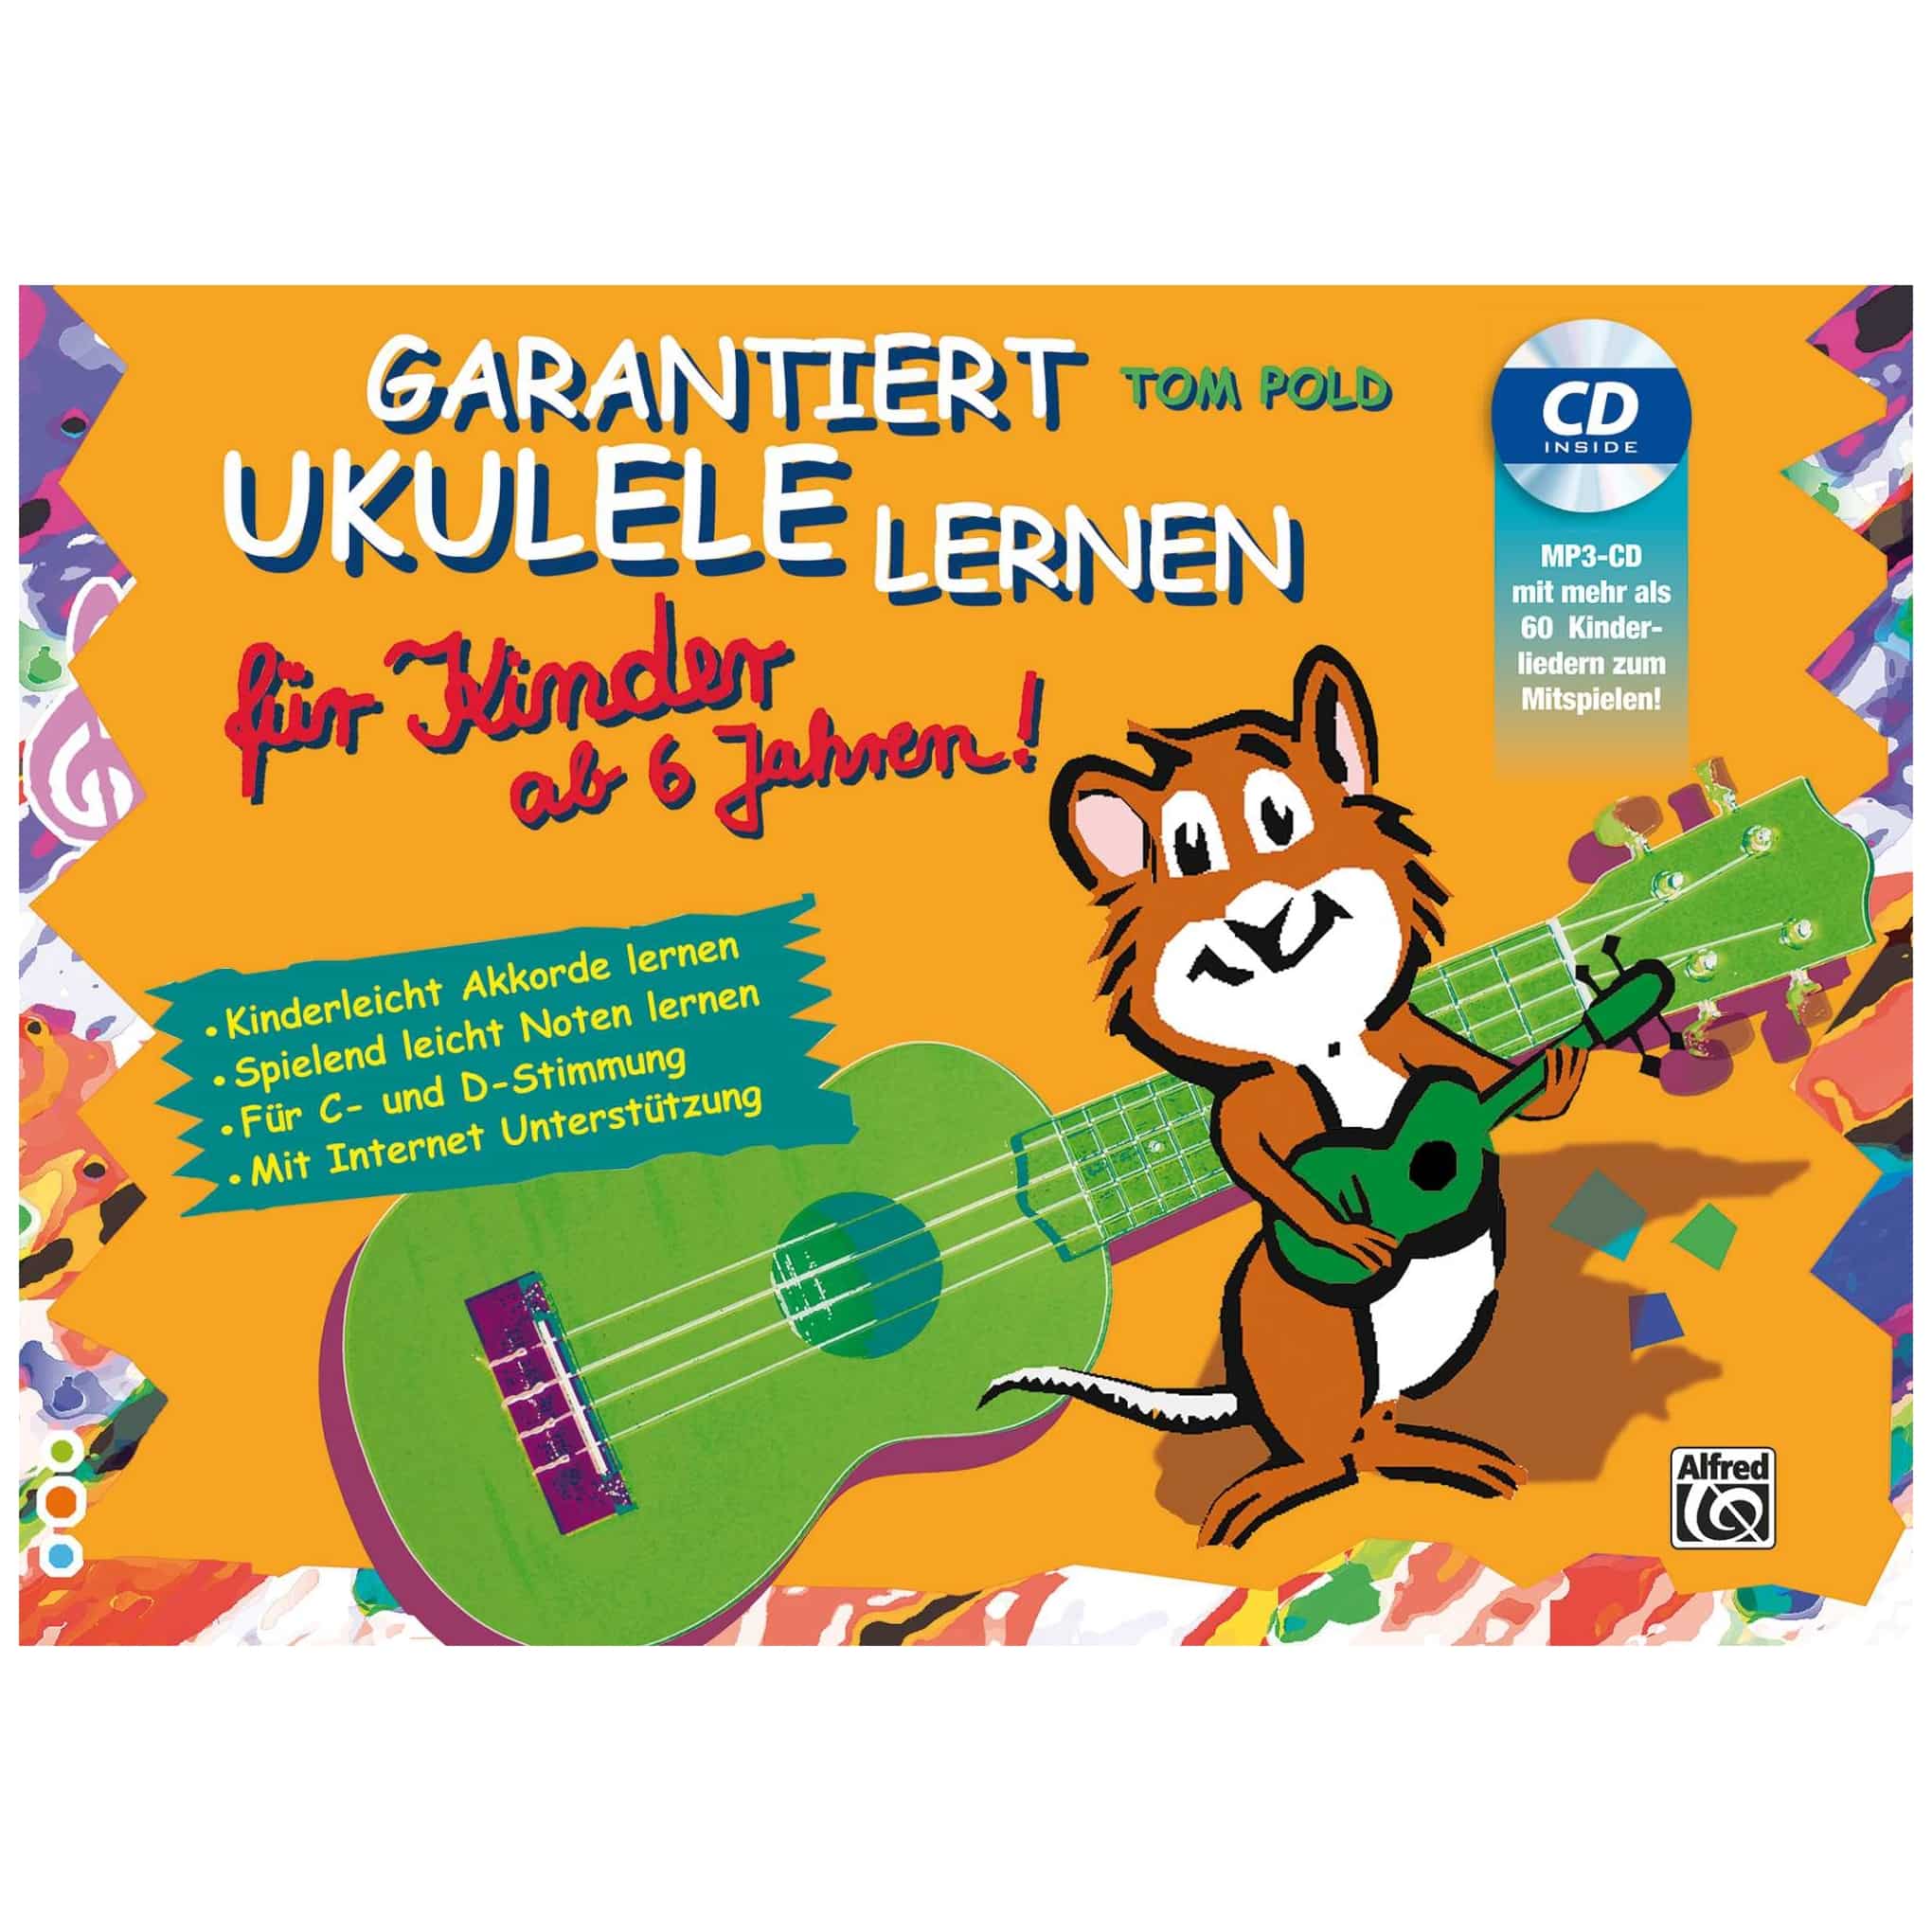 Alfred Music Publishing Tom Pold - Garantiert Ukulele Lernen für Kinder